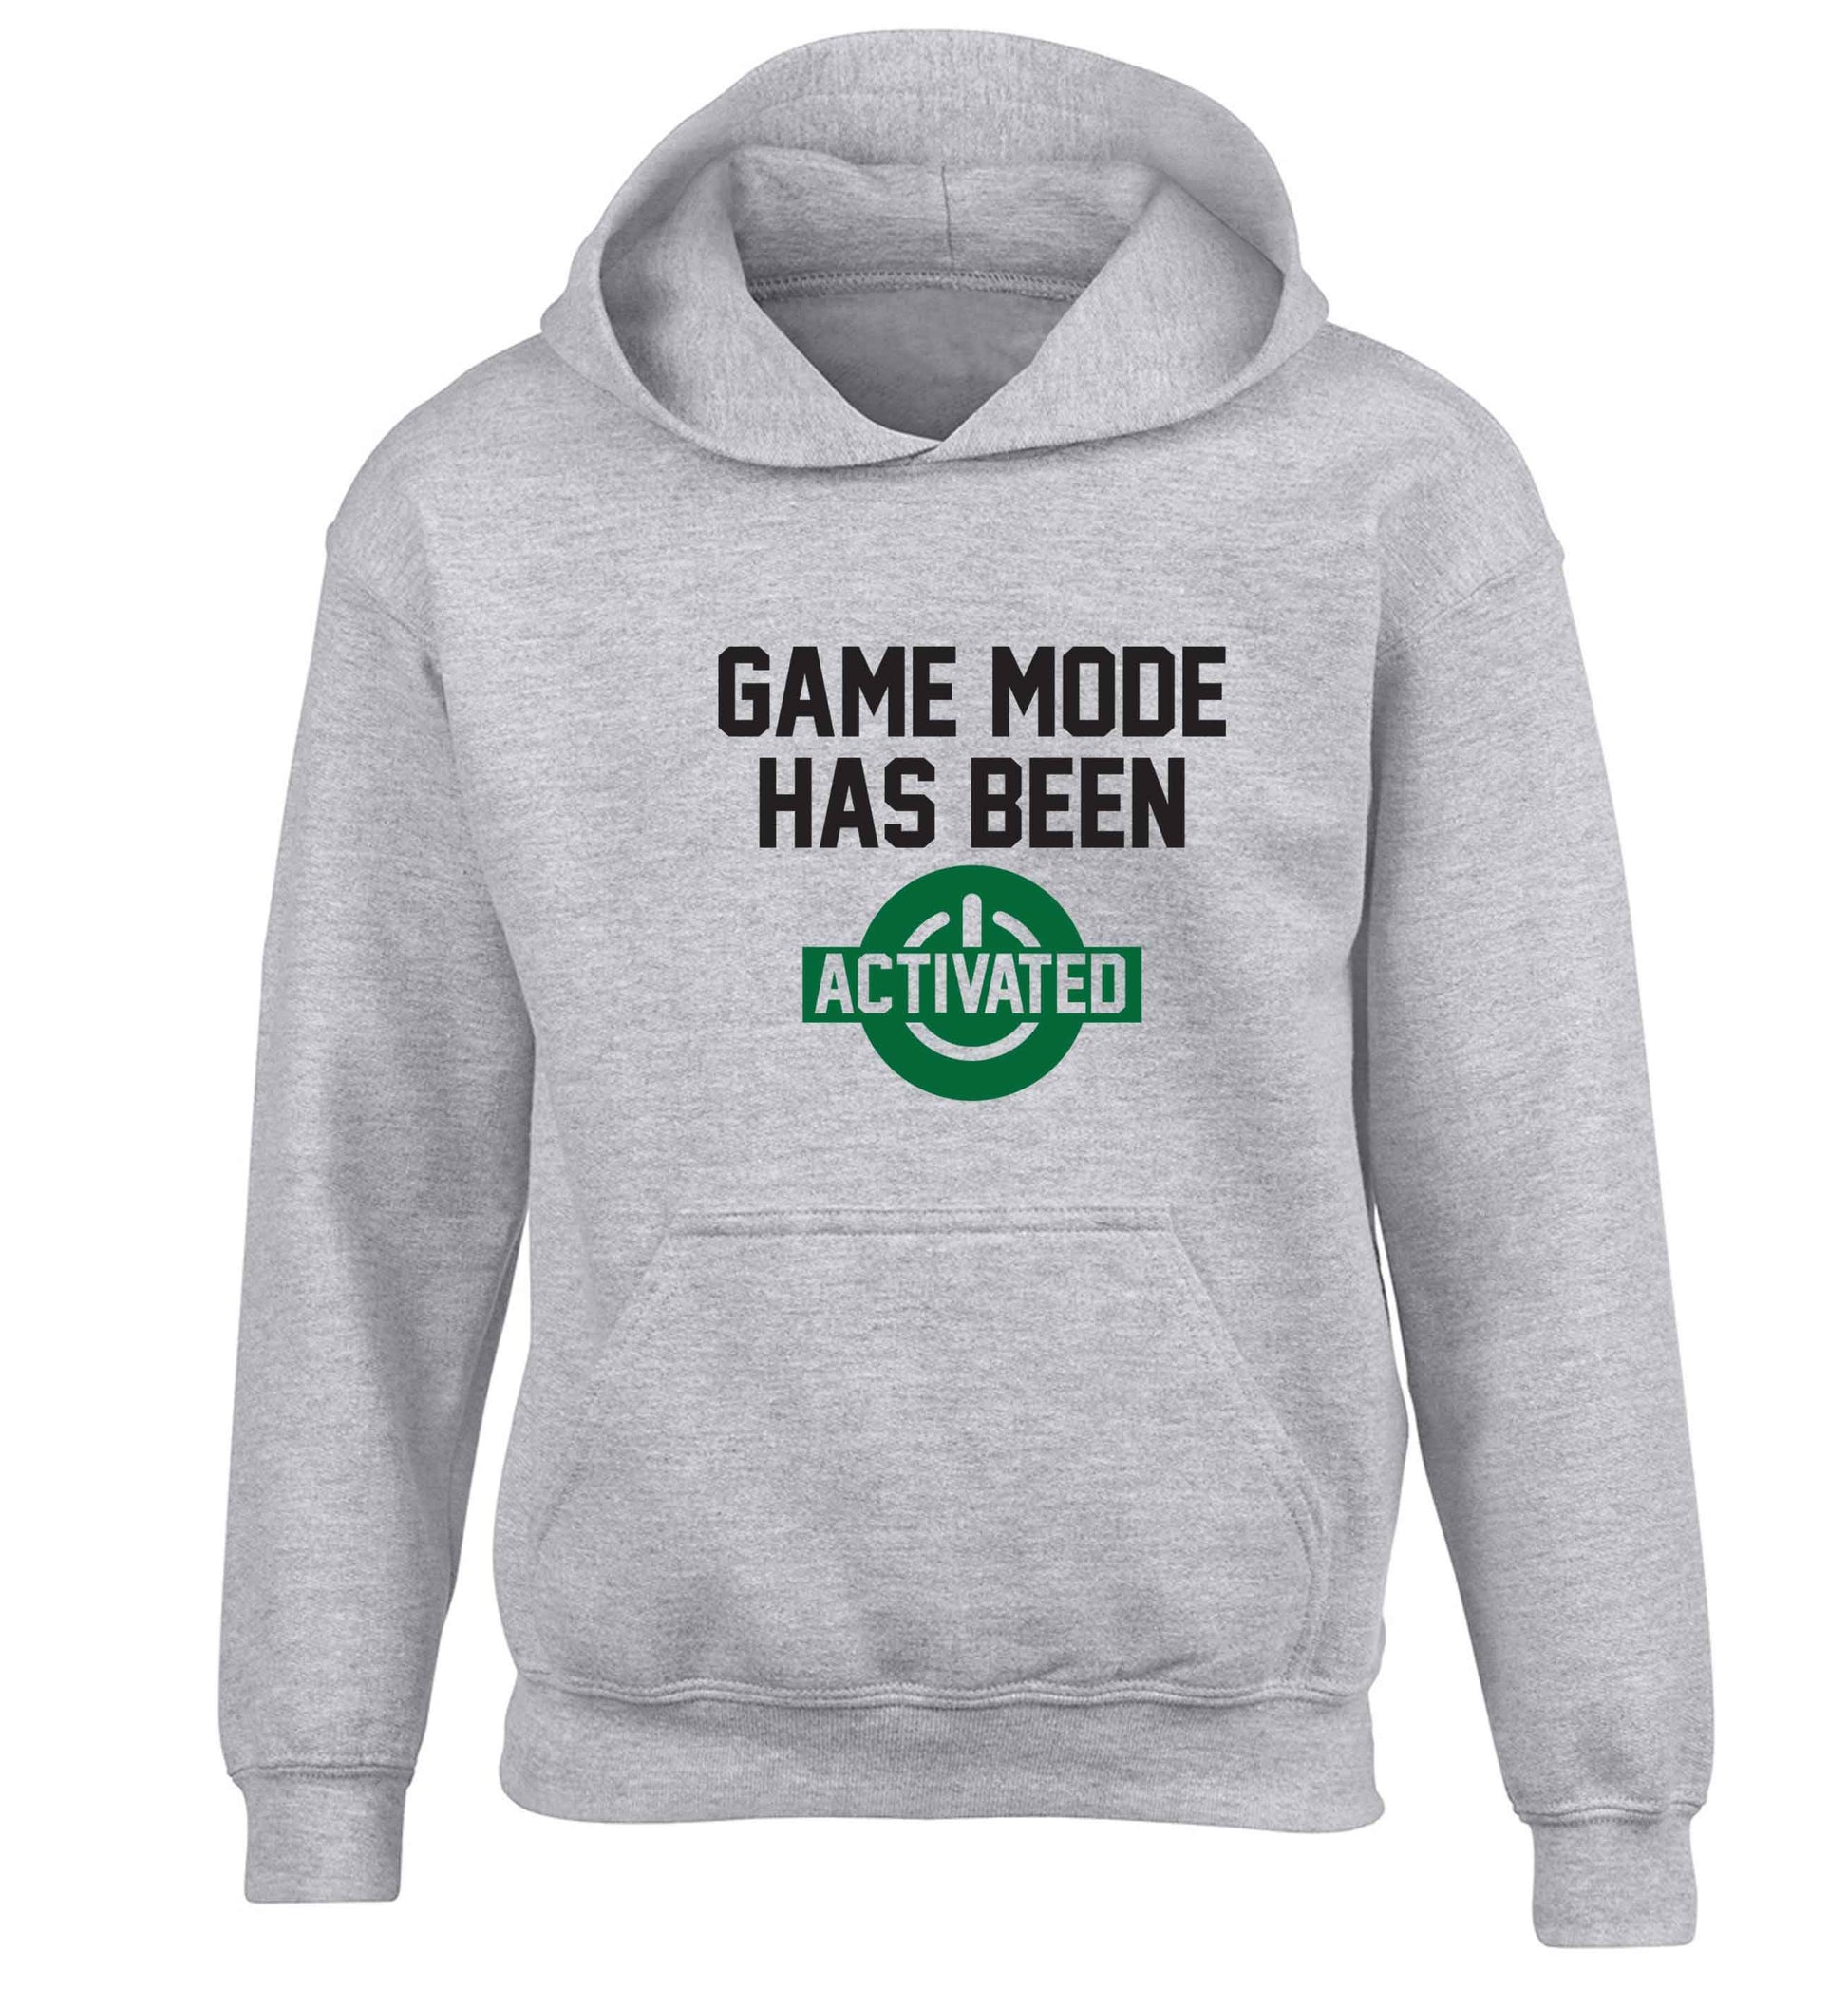 Game mode has been activated children's grey hoodie 12-13 Years